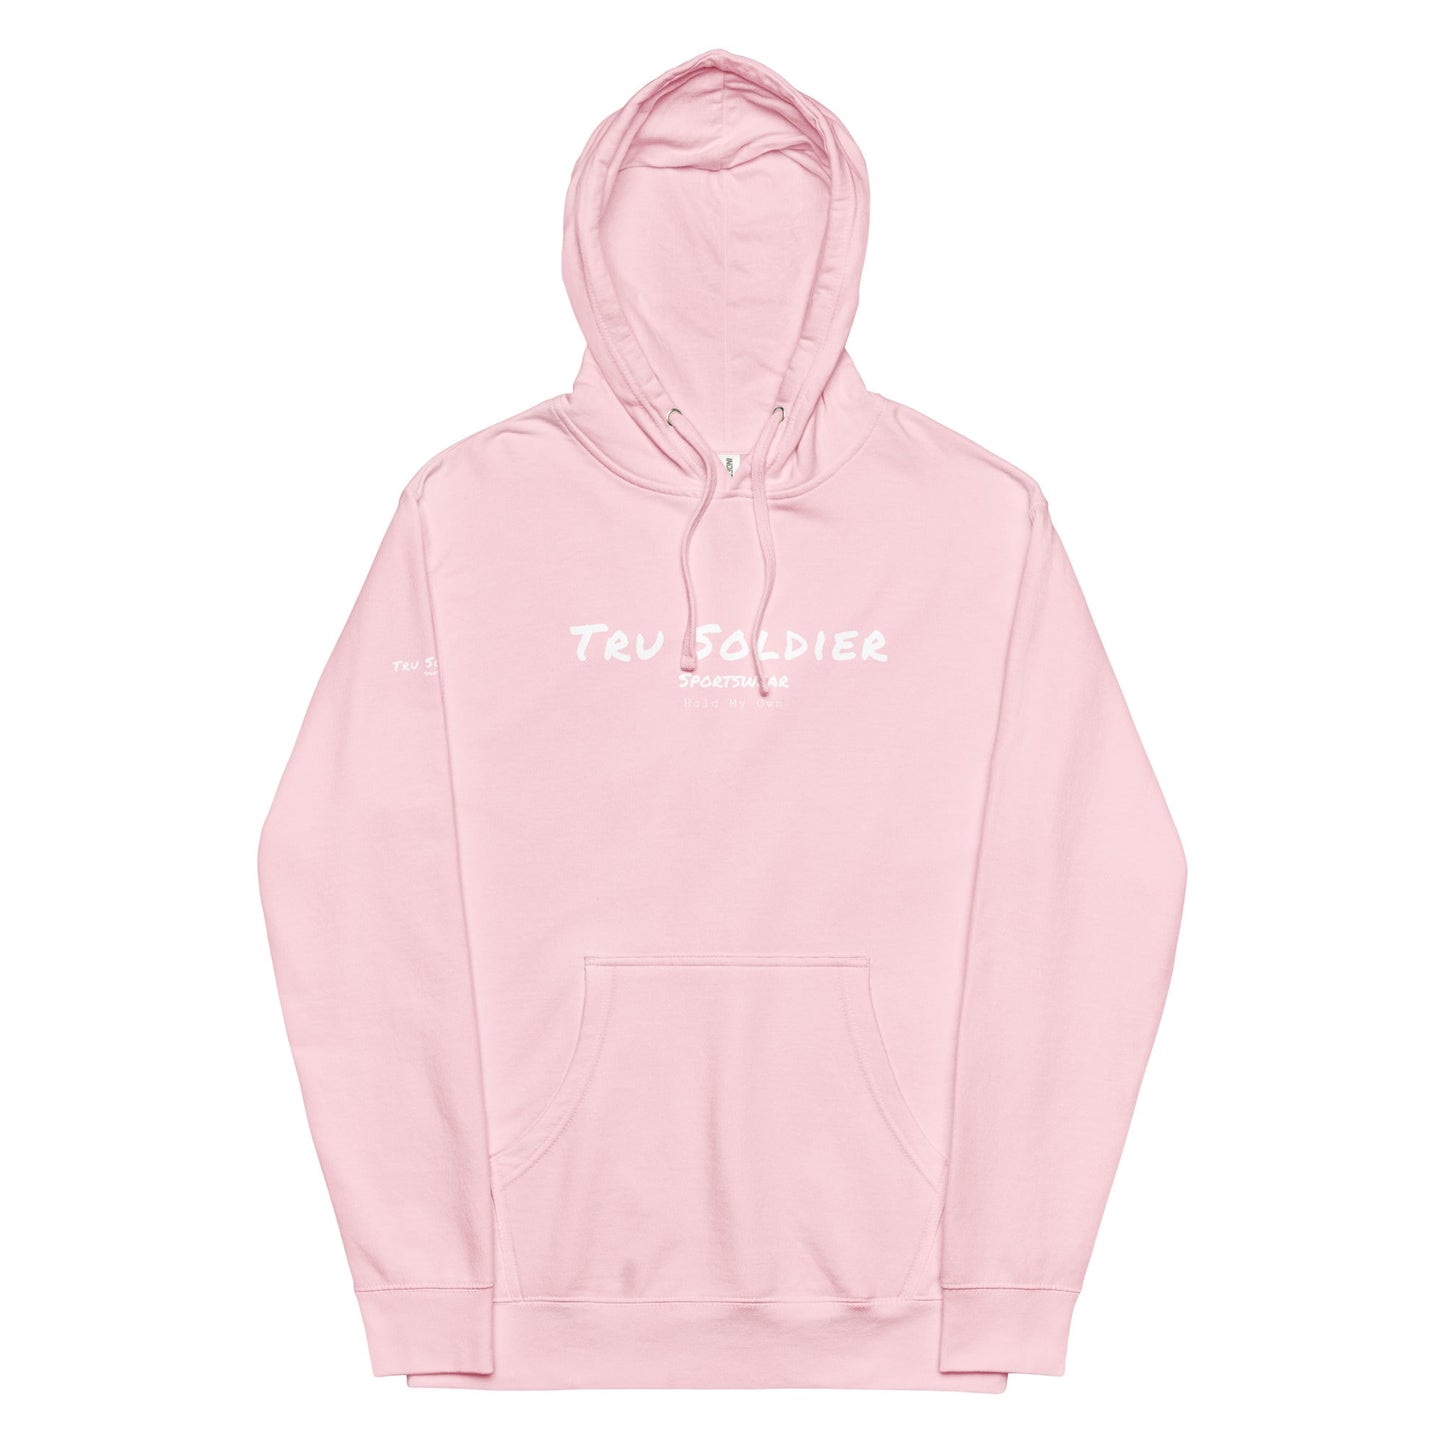 Tru Soldier Sportswear  Light Pink / S Signature midweight hoodie